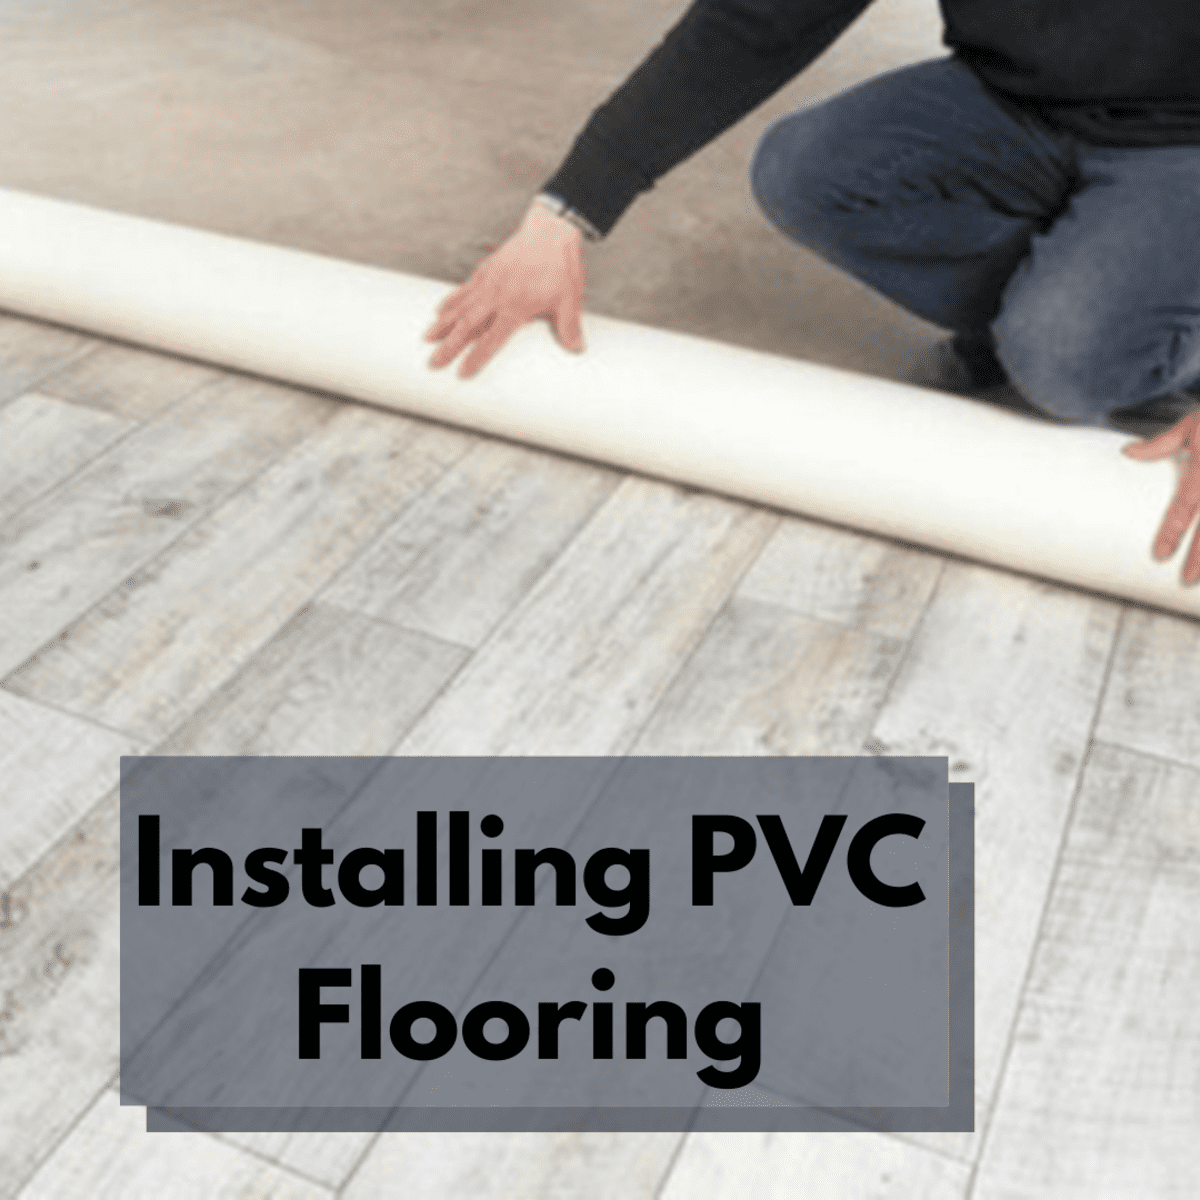 How to Install PVC Flooring - Dengarden